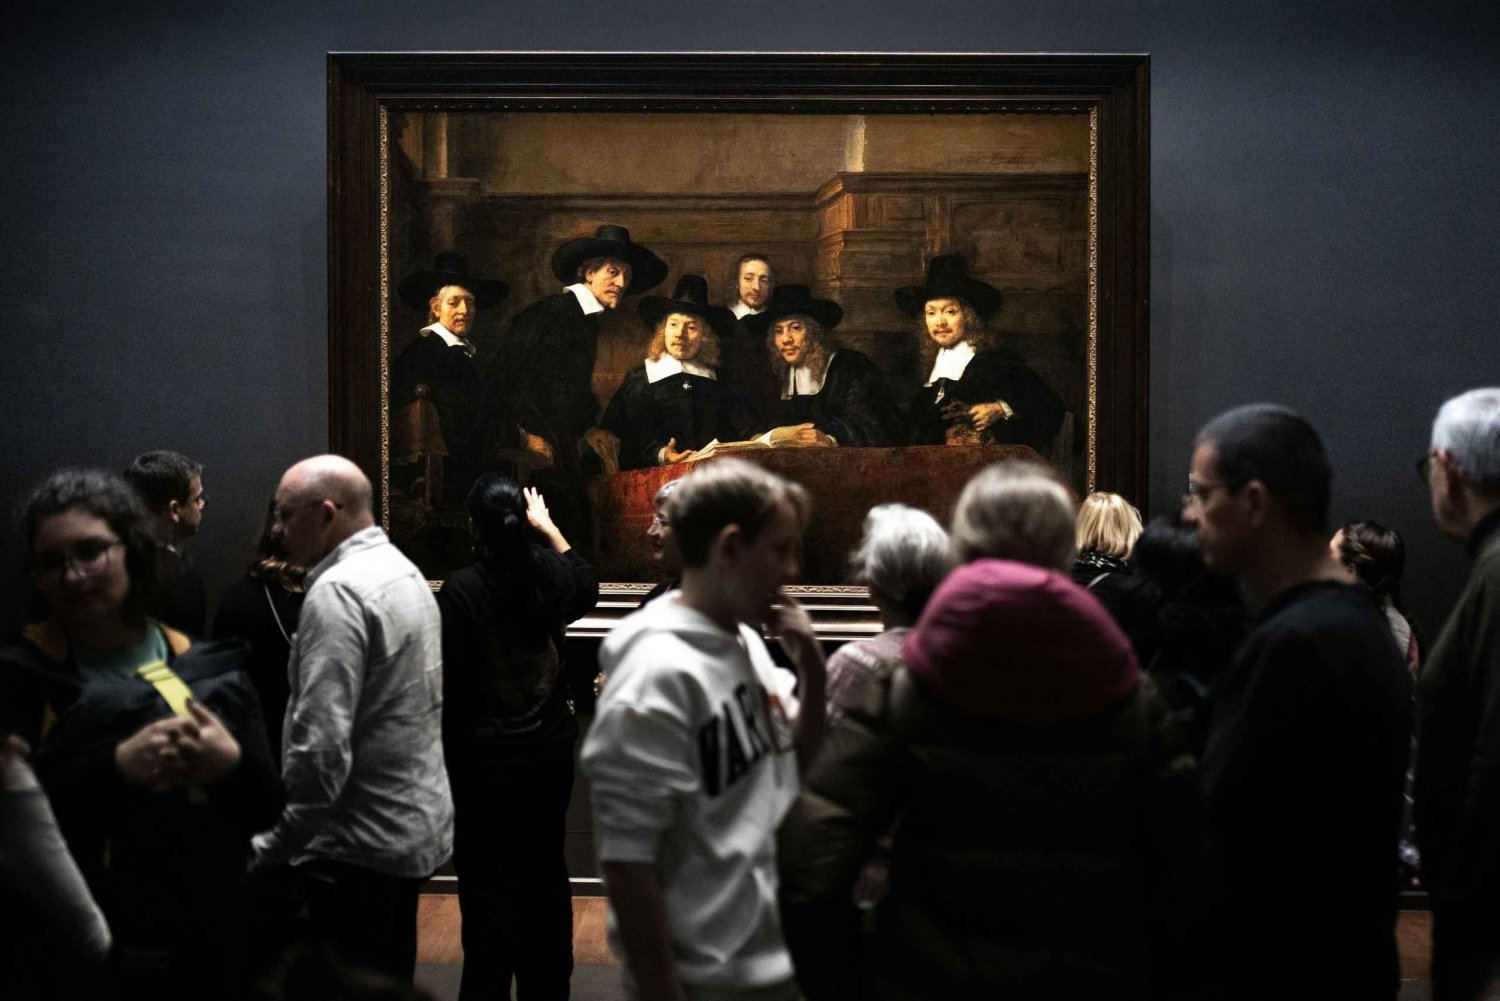 Amsterdam: Great Painters tour (Rembrandt, Van Gogh i.a.)